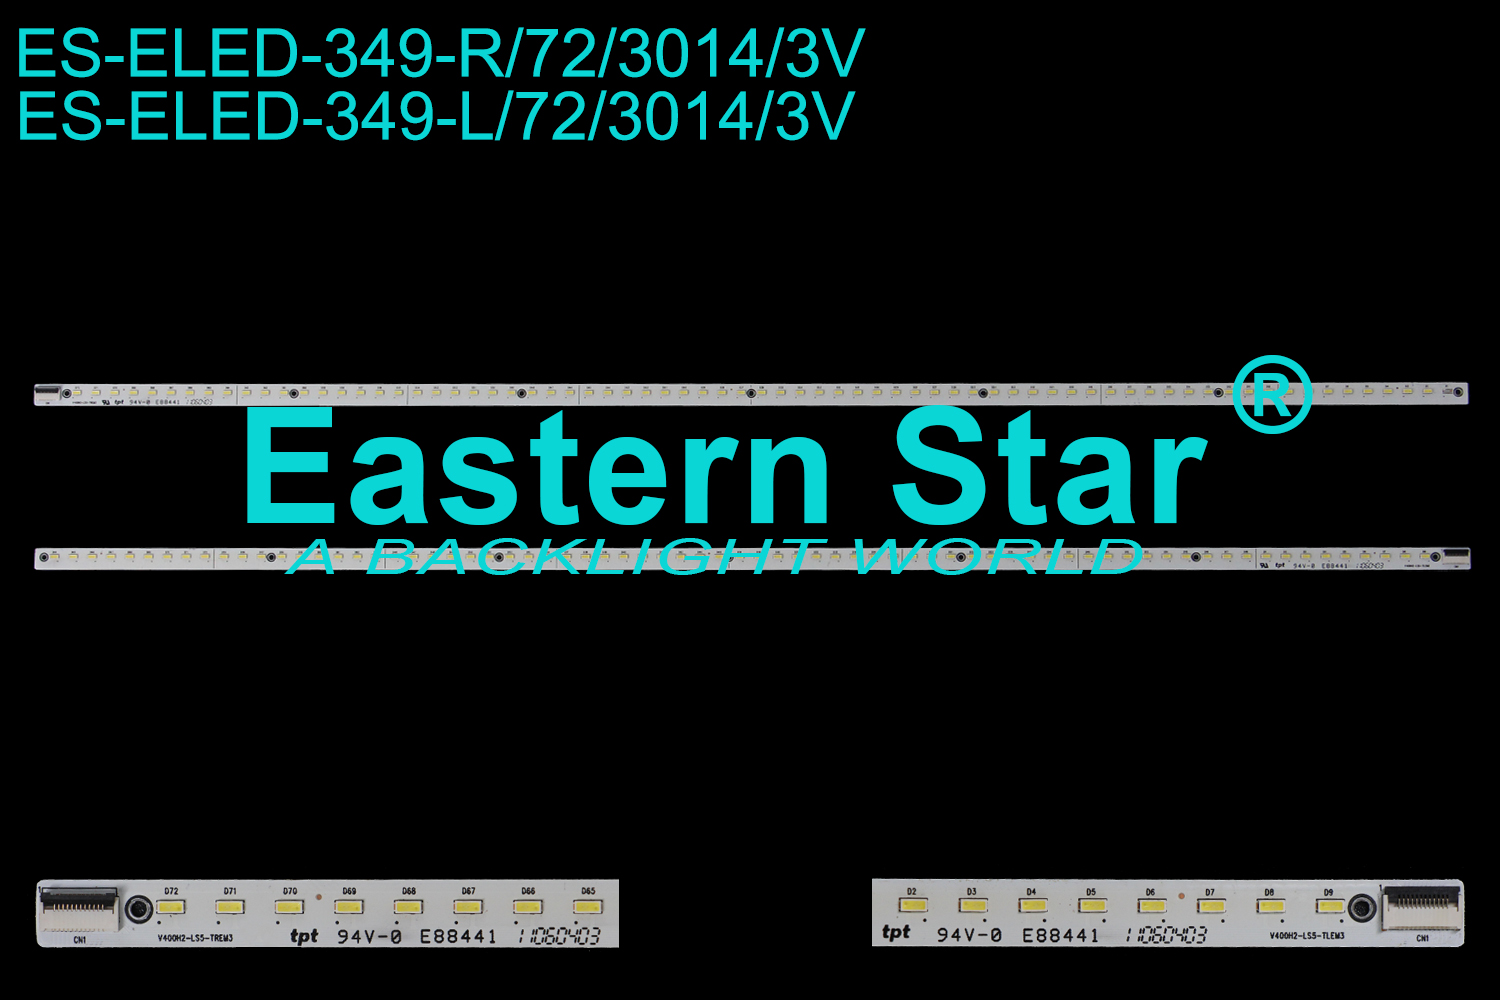 ES-ELED-349 ELED/EDGE TV backlight use for 40'' Toshiba/Chimei V400H2-LS5-TLEM3, 400H2-LS5-TREM3, E88441 LED STRIPS(2)